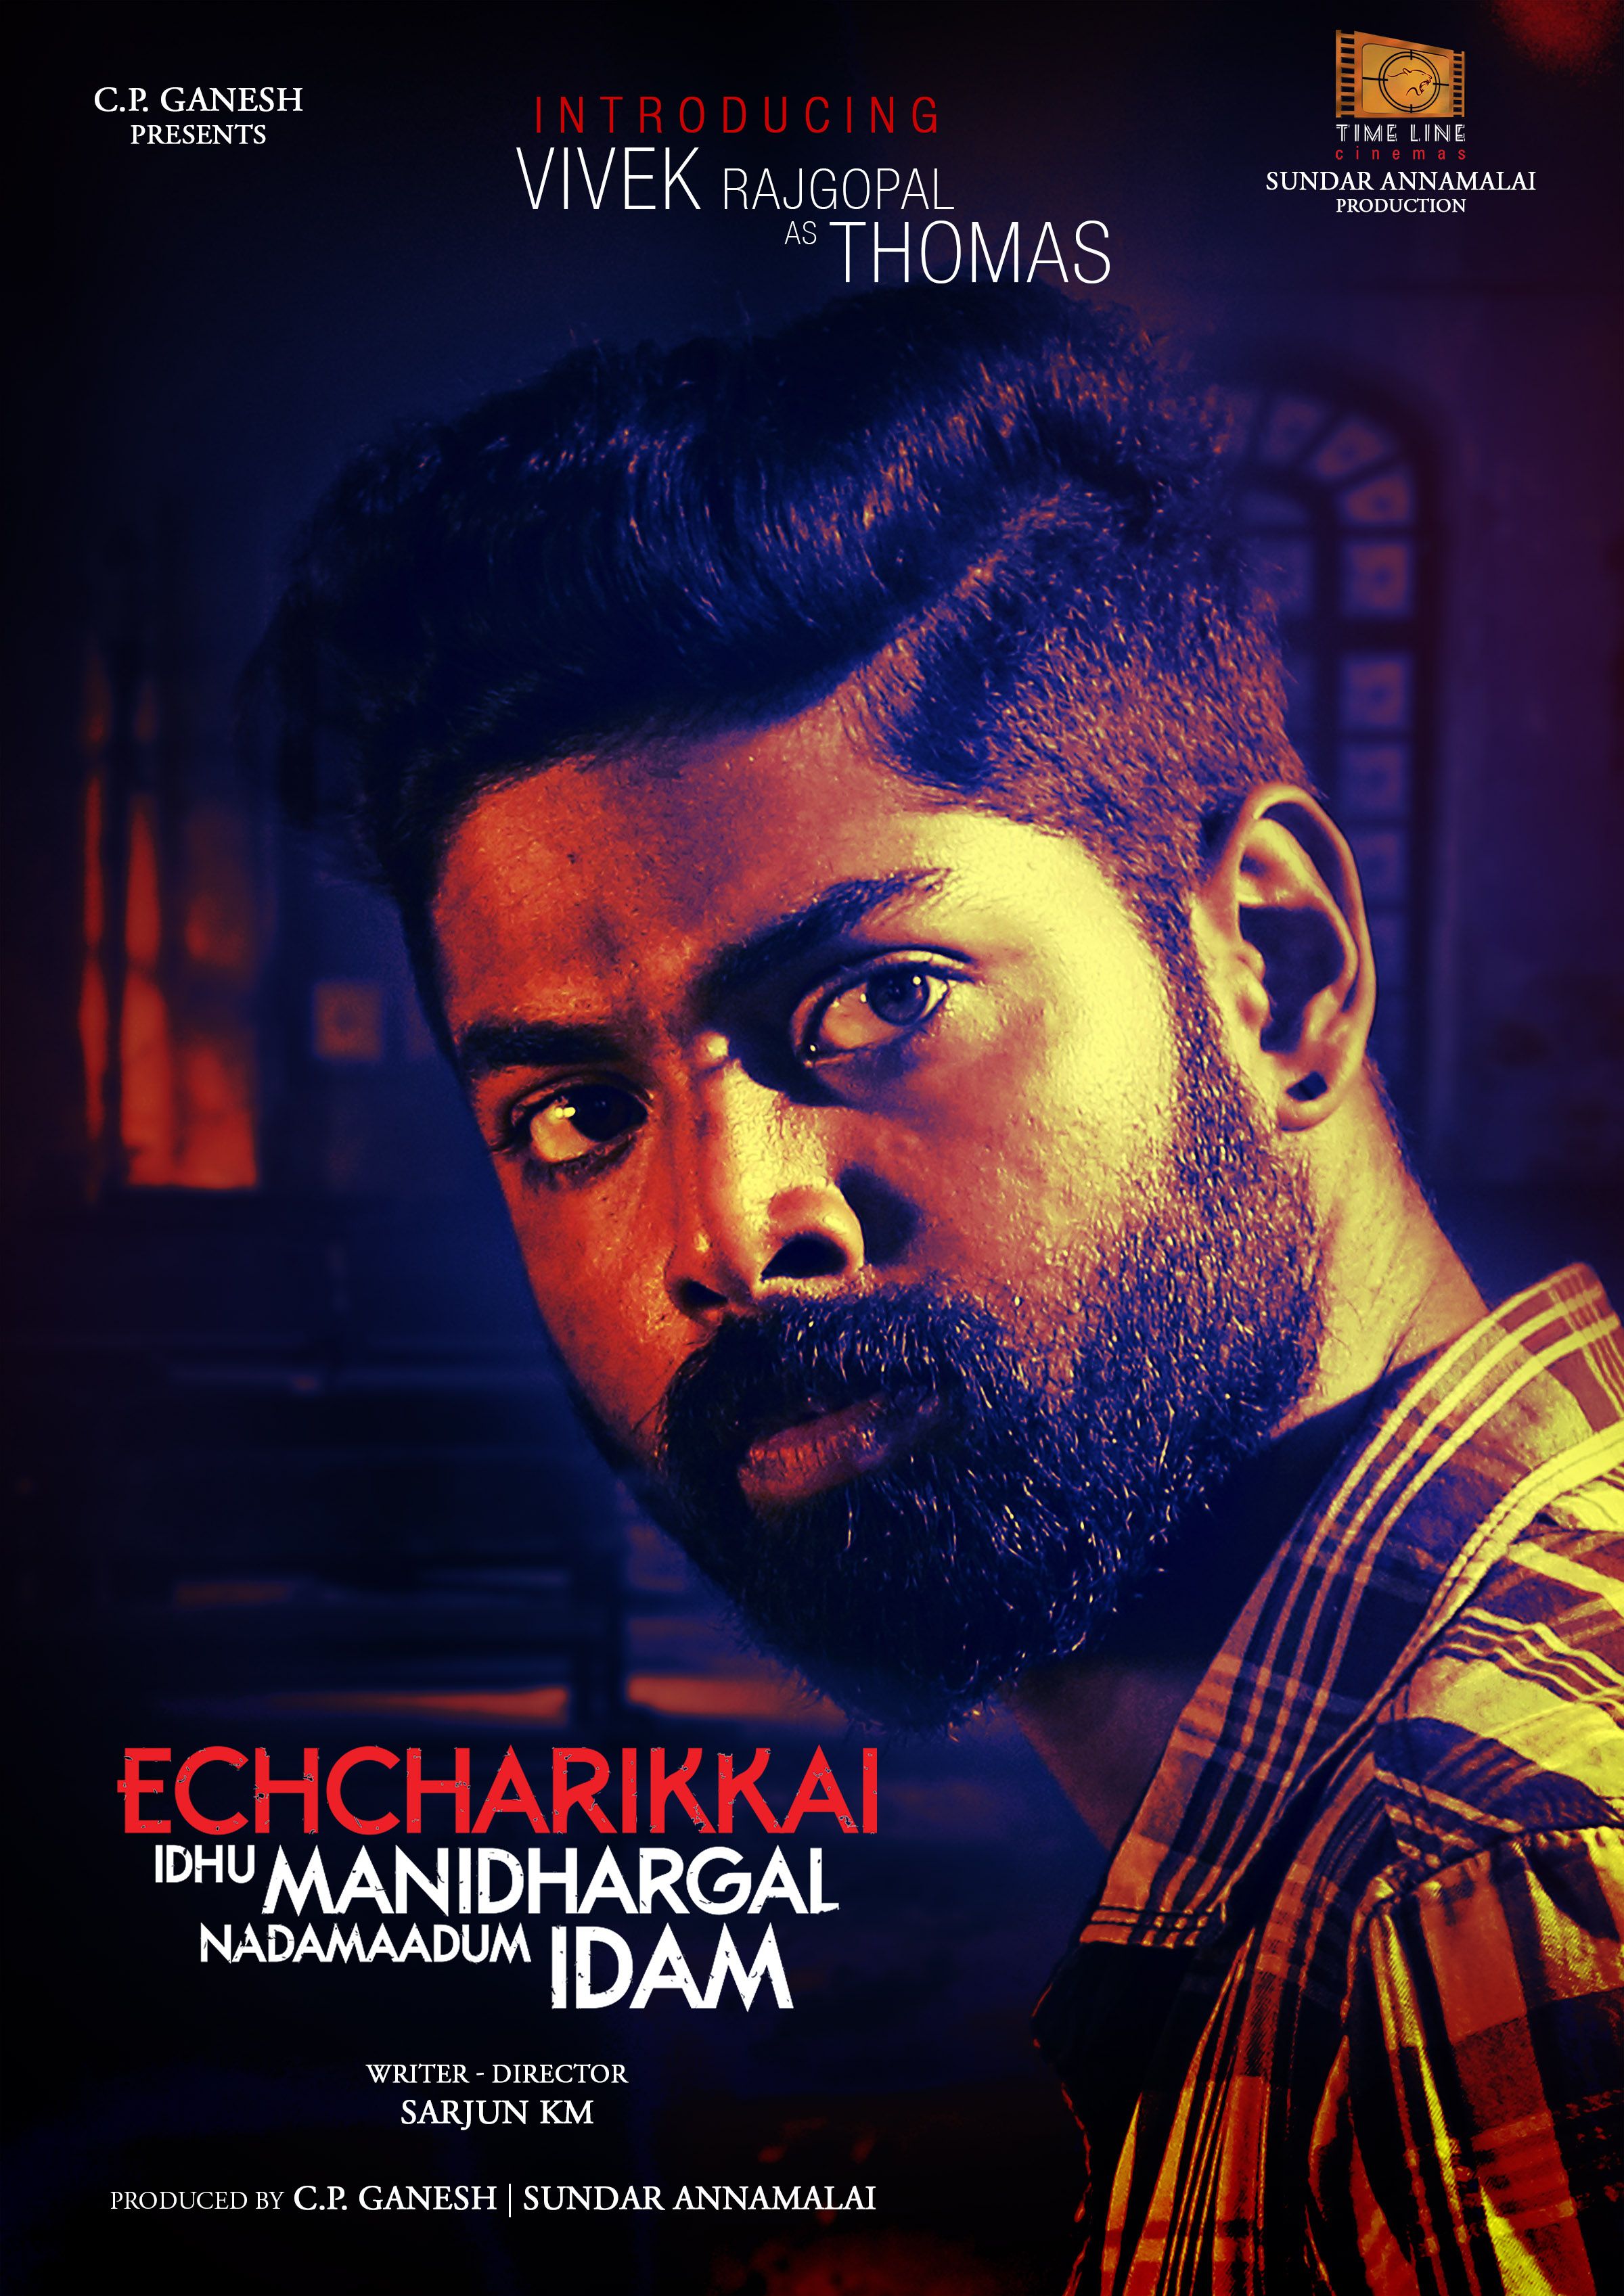 Echarikkai Idhu Manithargal Nadamadum Idam Reviews Ratings Box Office Trailers Runtime Watch full tamil movie muthal echarikkai. echarikkai idhu manithargal nadamadum